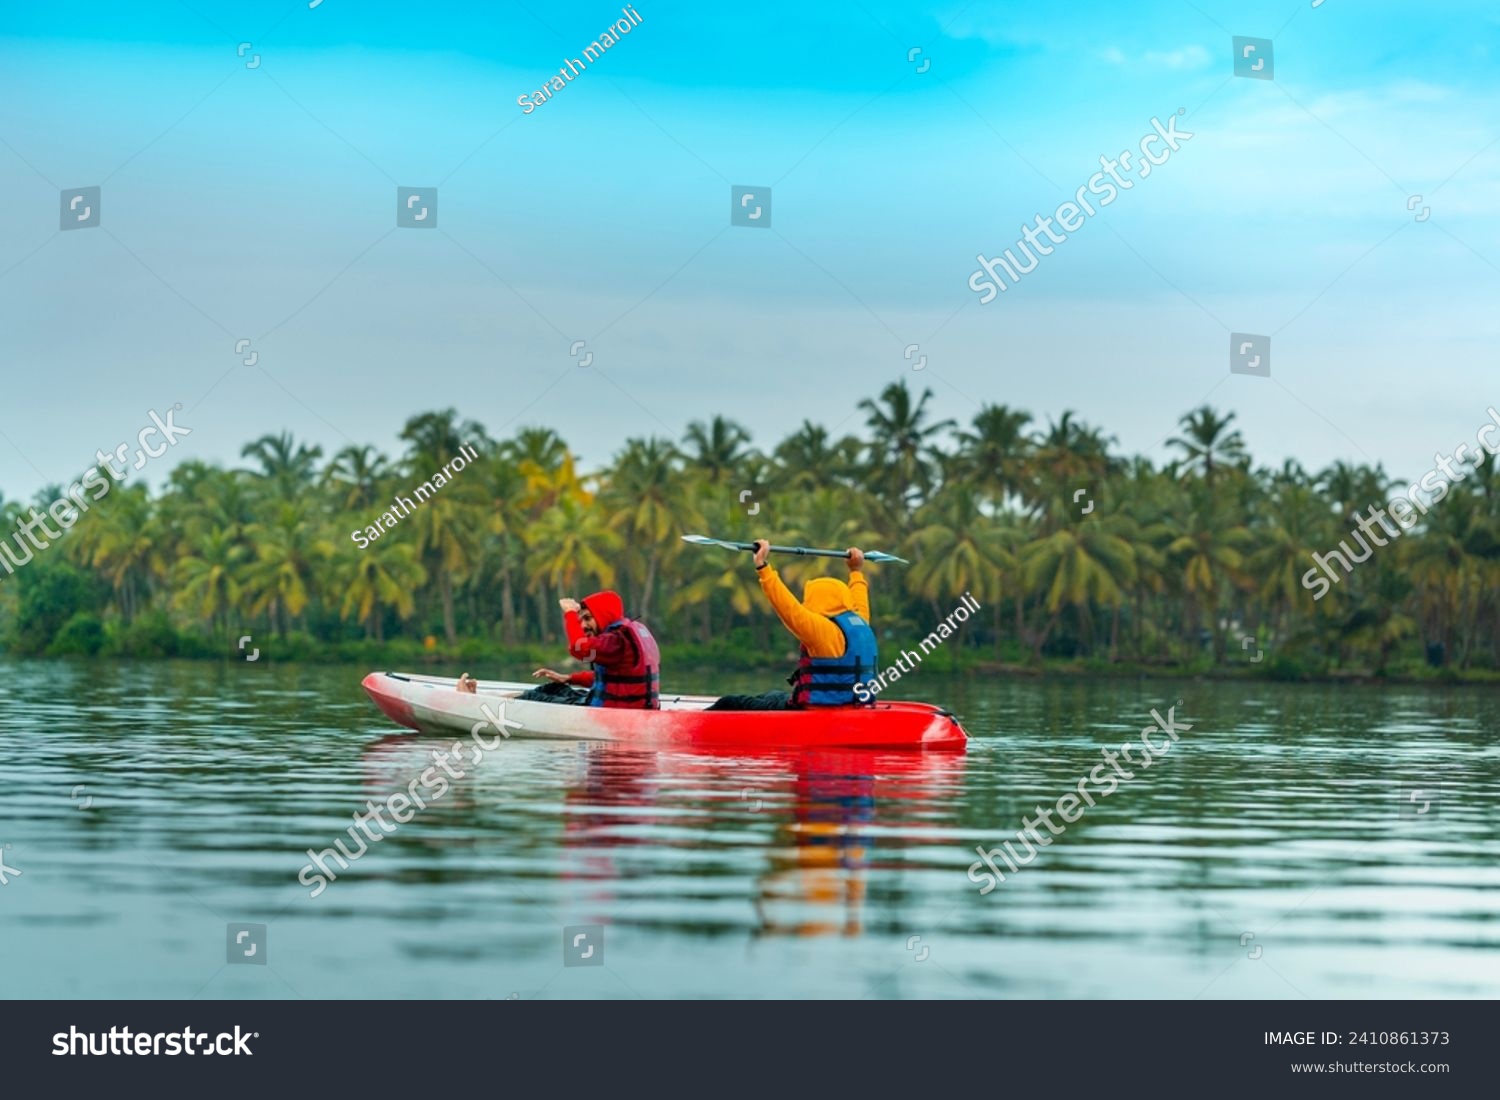 Kayaking in Kerala image, Travel guys kayaking and enjoying the nature view, Kerala travel and tourism concept background #2410861373